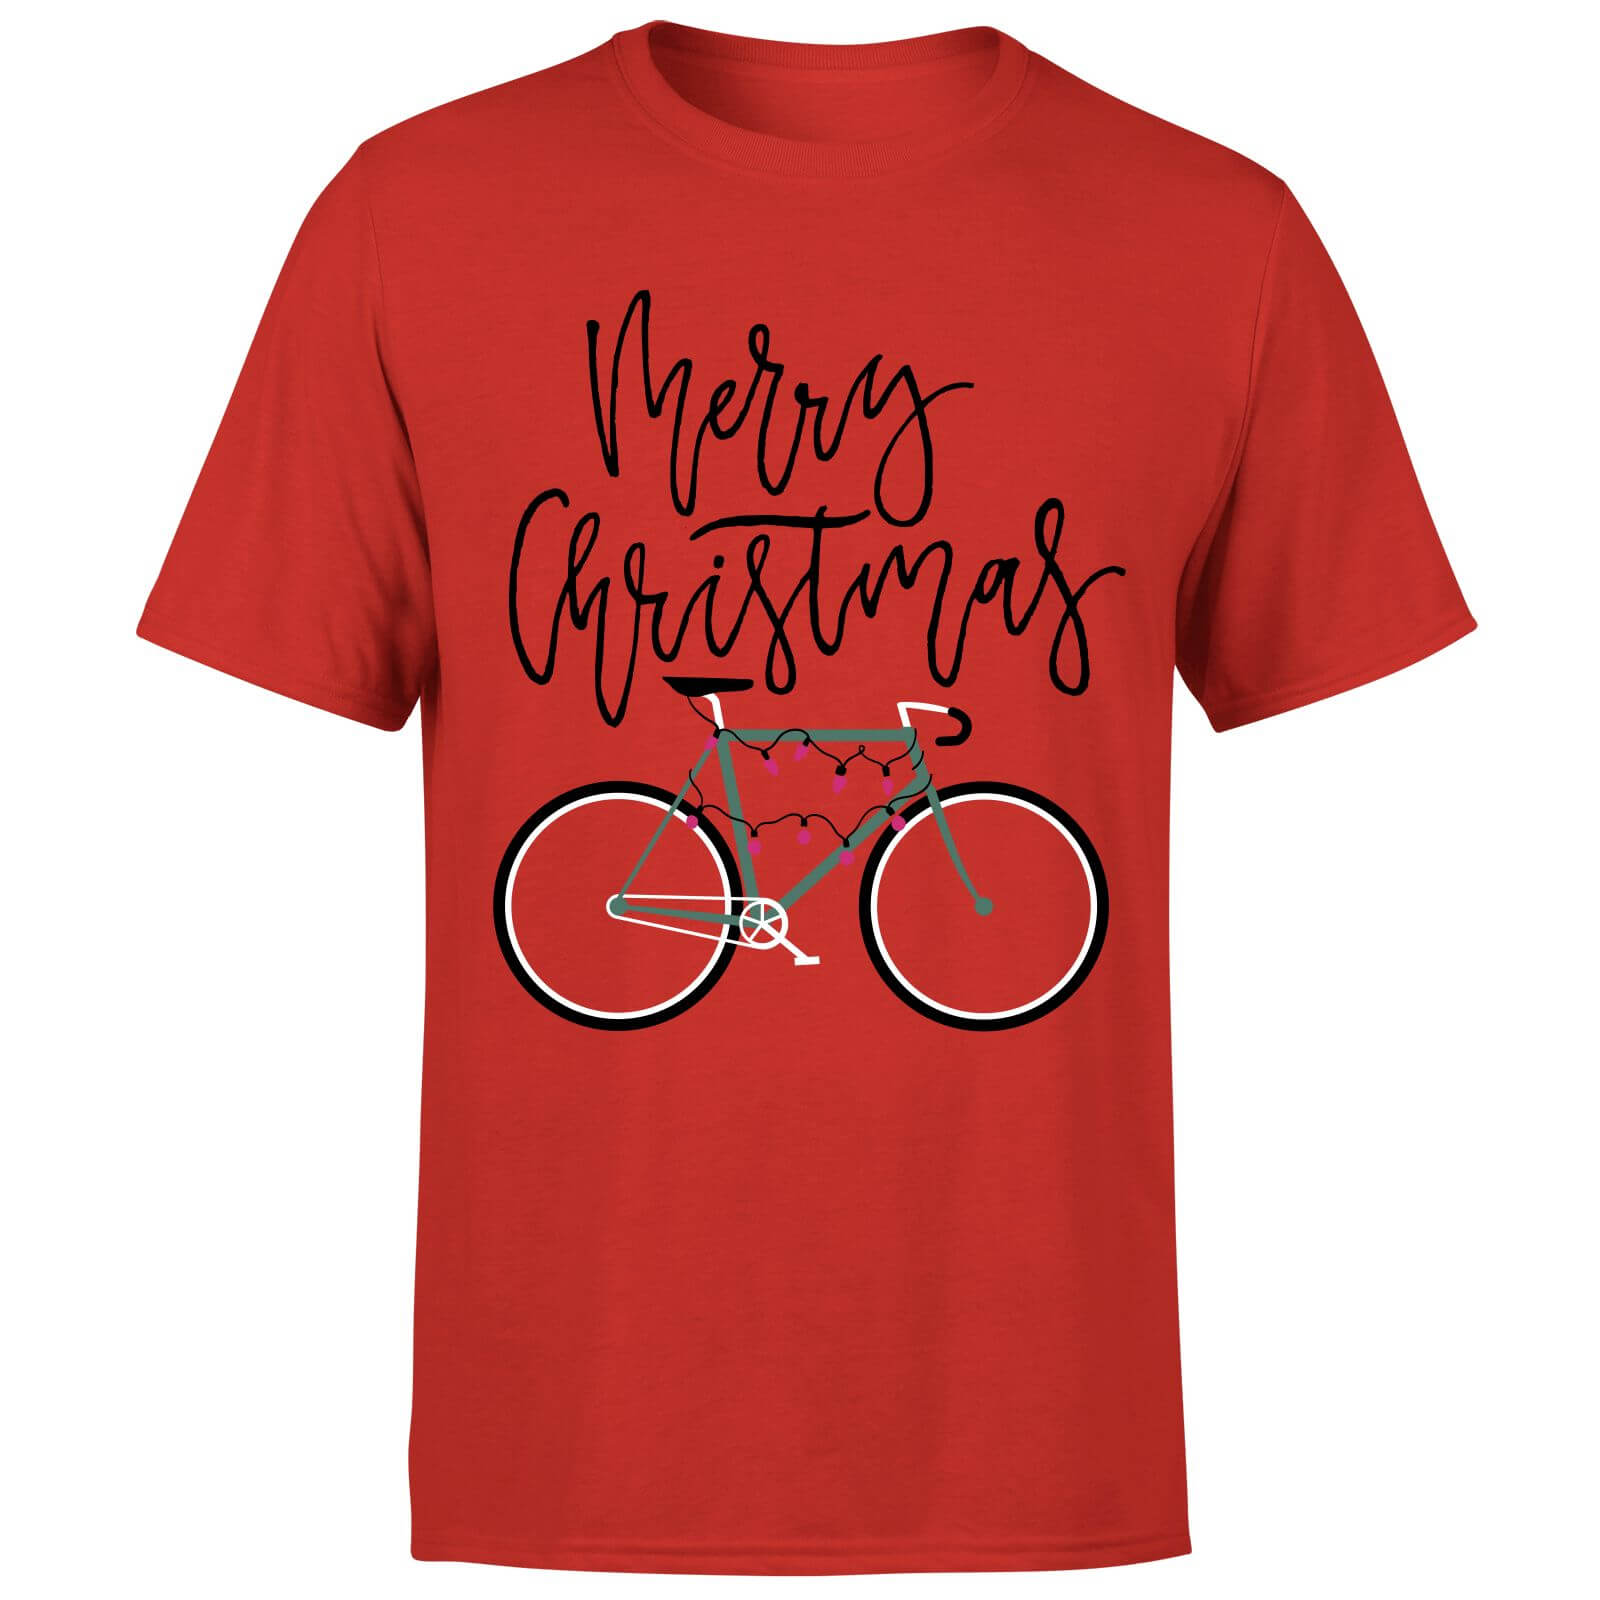 Bike Lights Men's Christmas T-Shirt - Red - M - Red